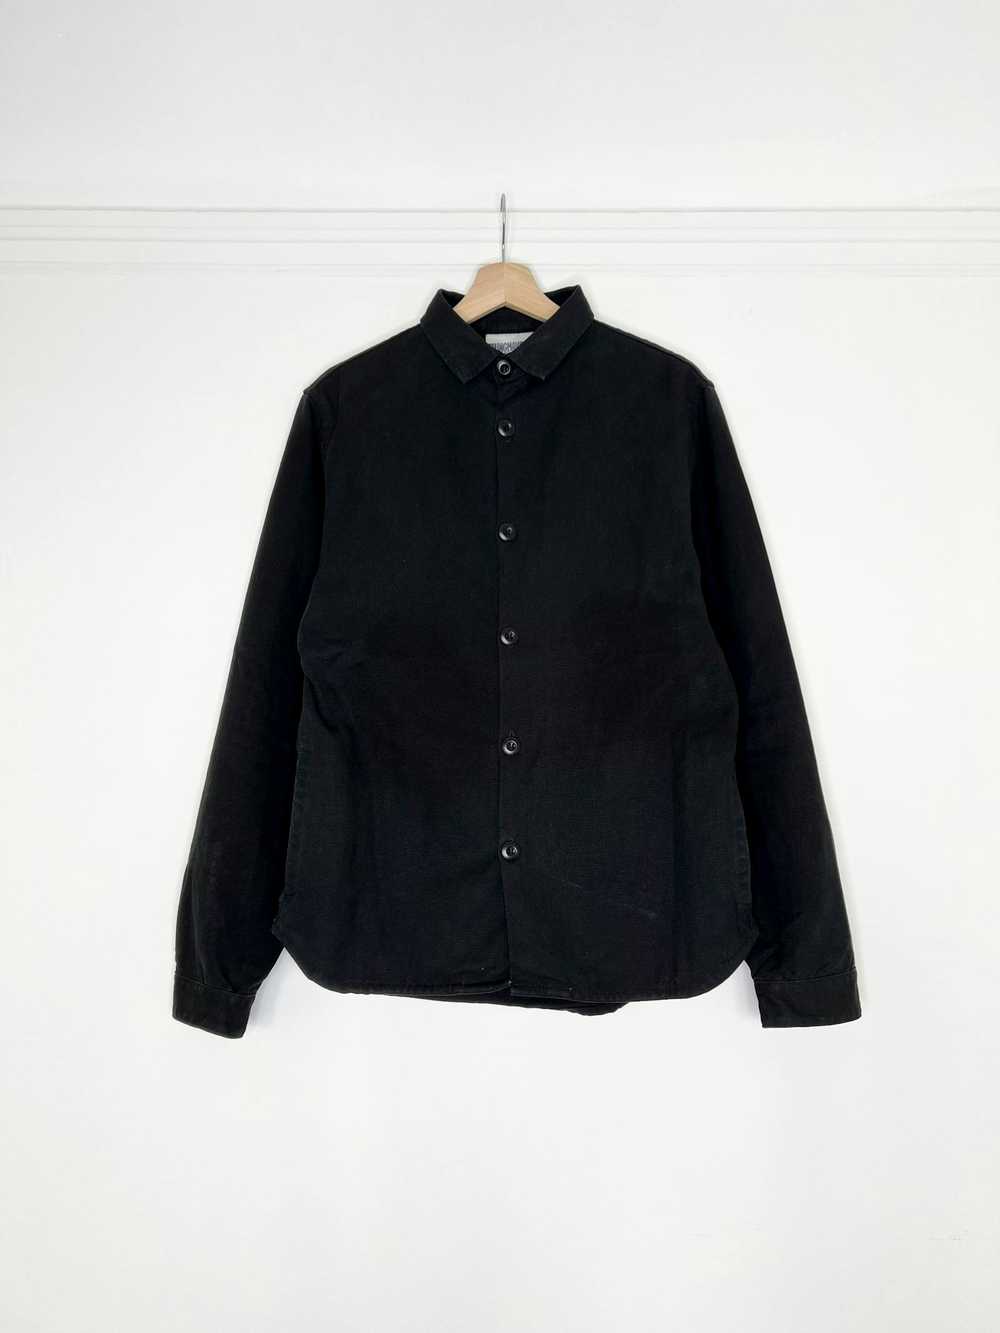 Jungmaven Jungmaven Topanga Shirt in Black Size S - image 1